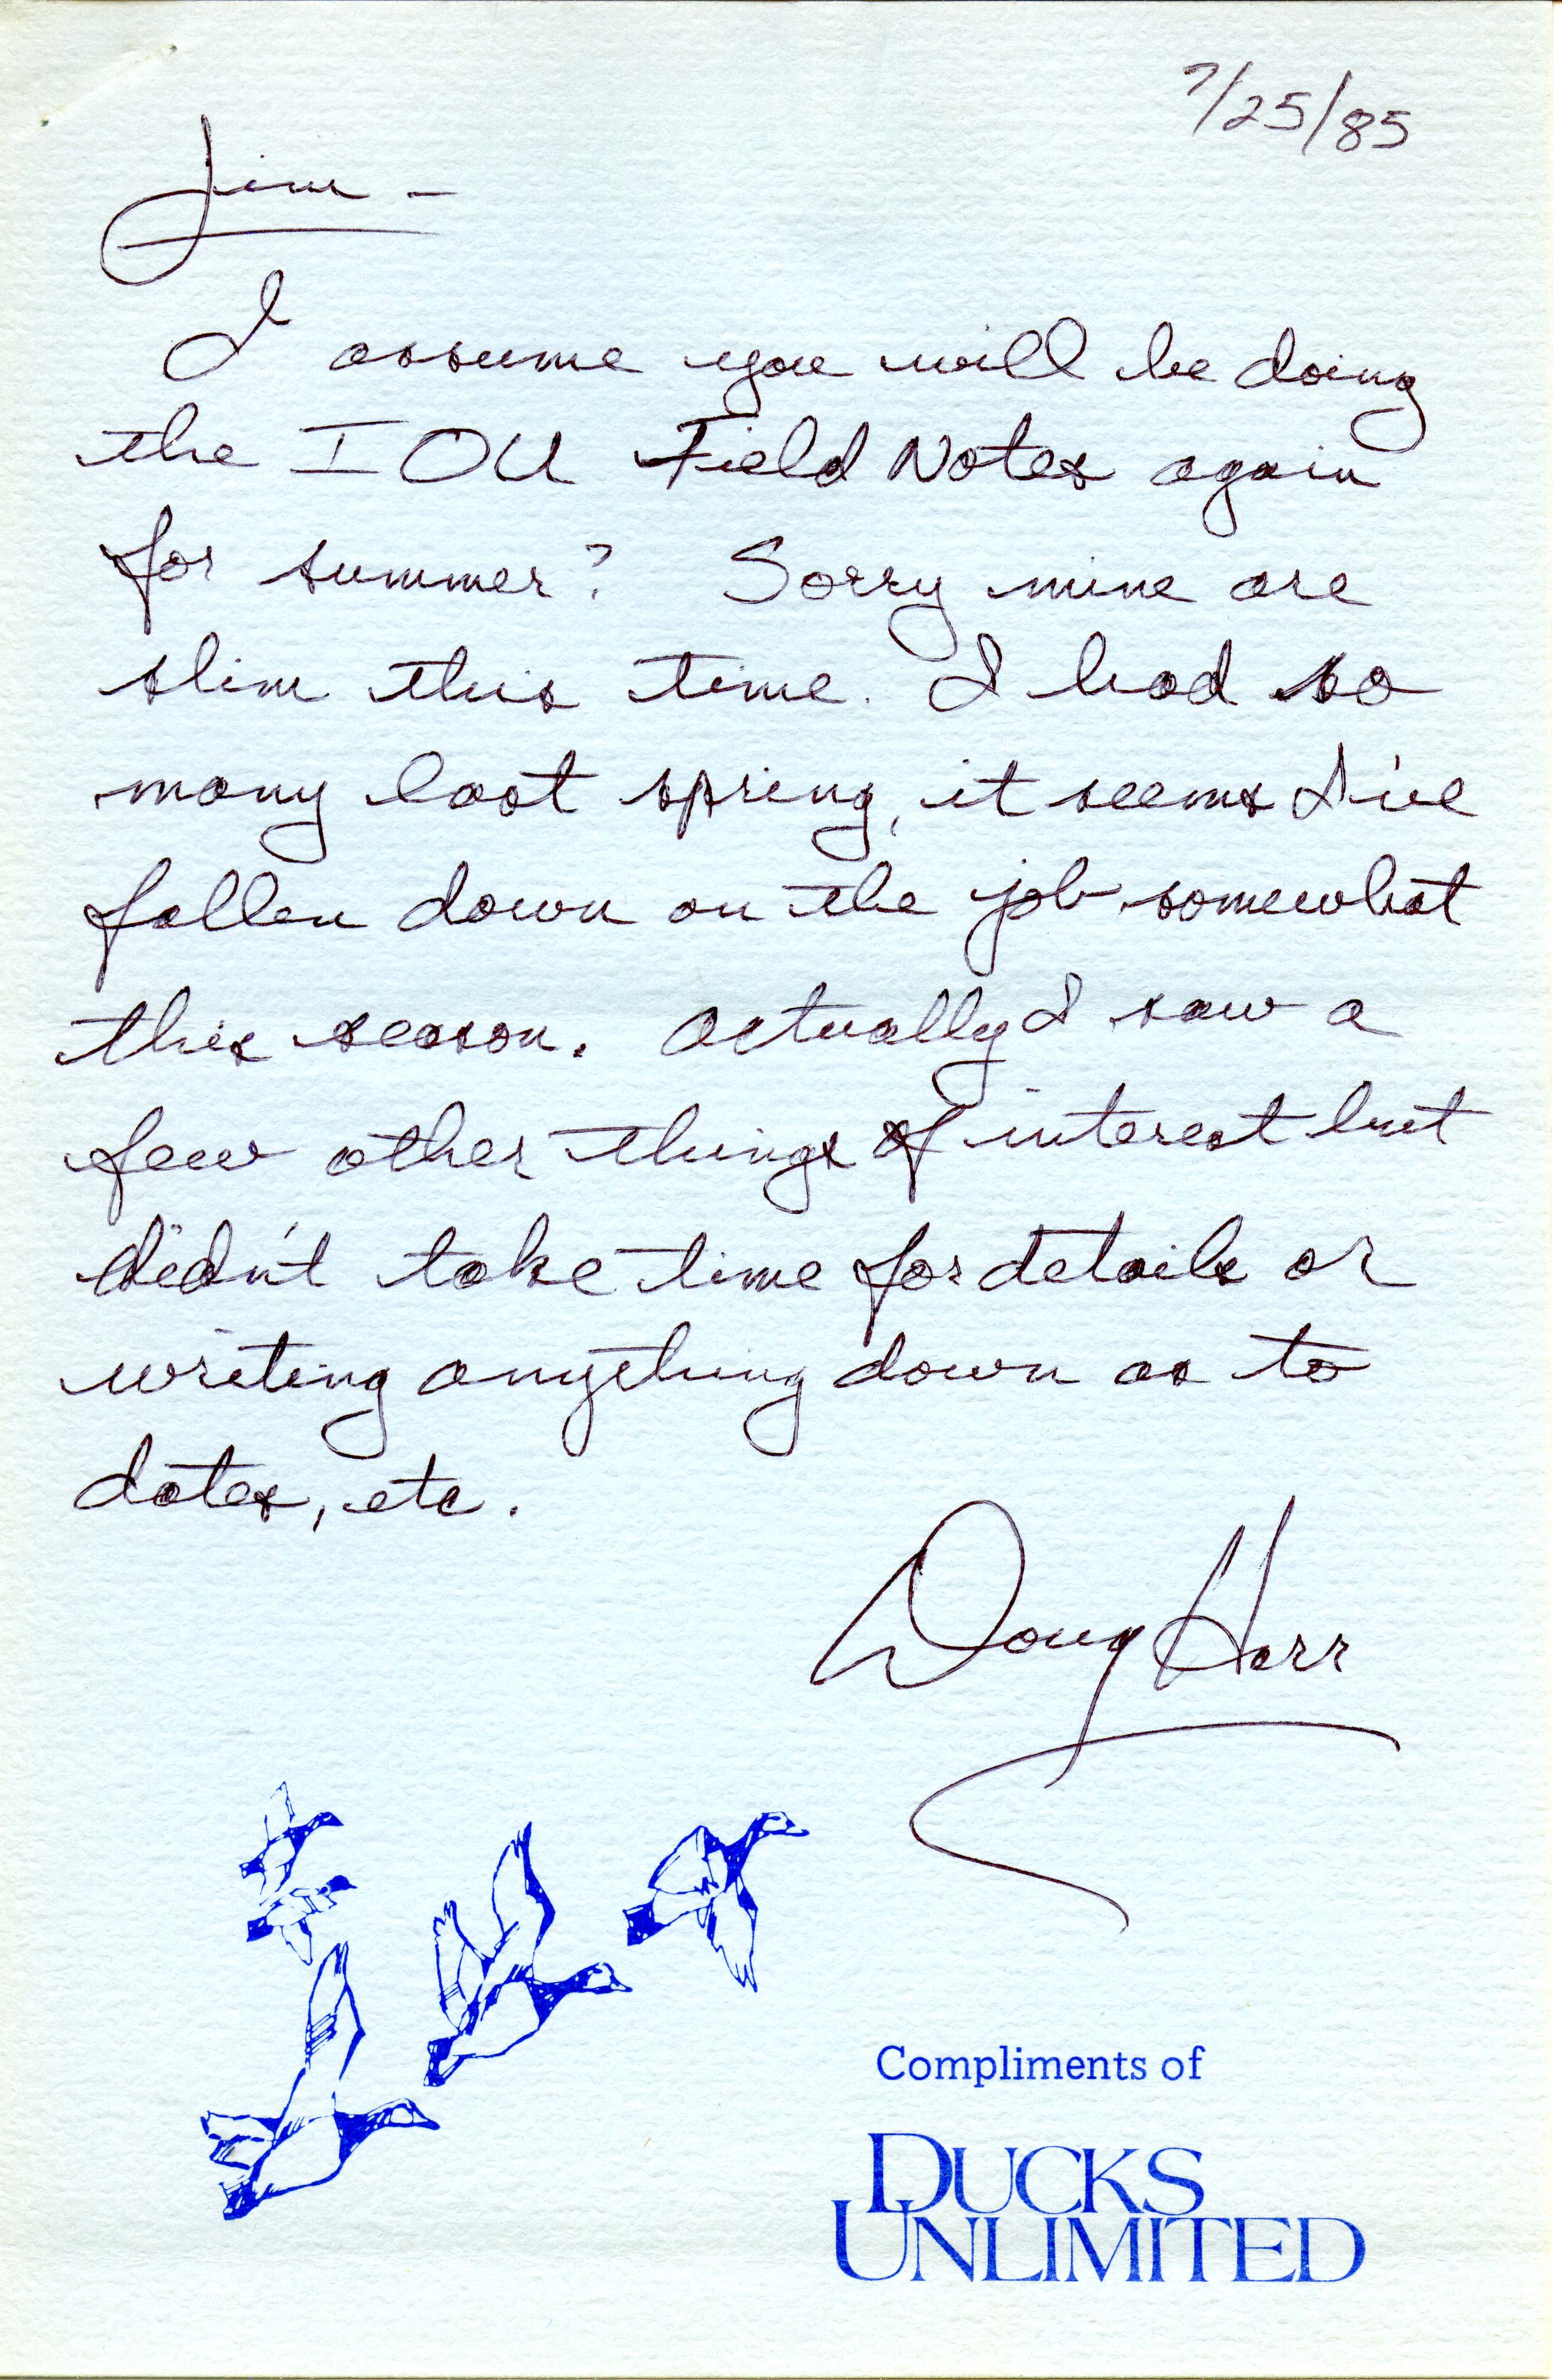 Field notes and Douglas C. Harr letter to James J. Dinsmore regarding bird sightings, July 25, 1985